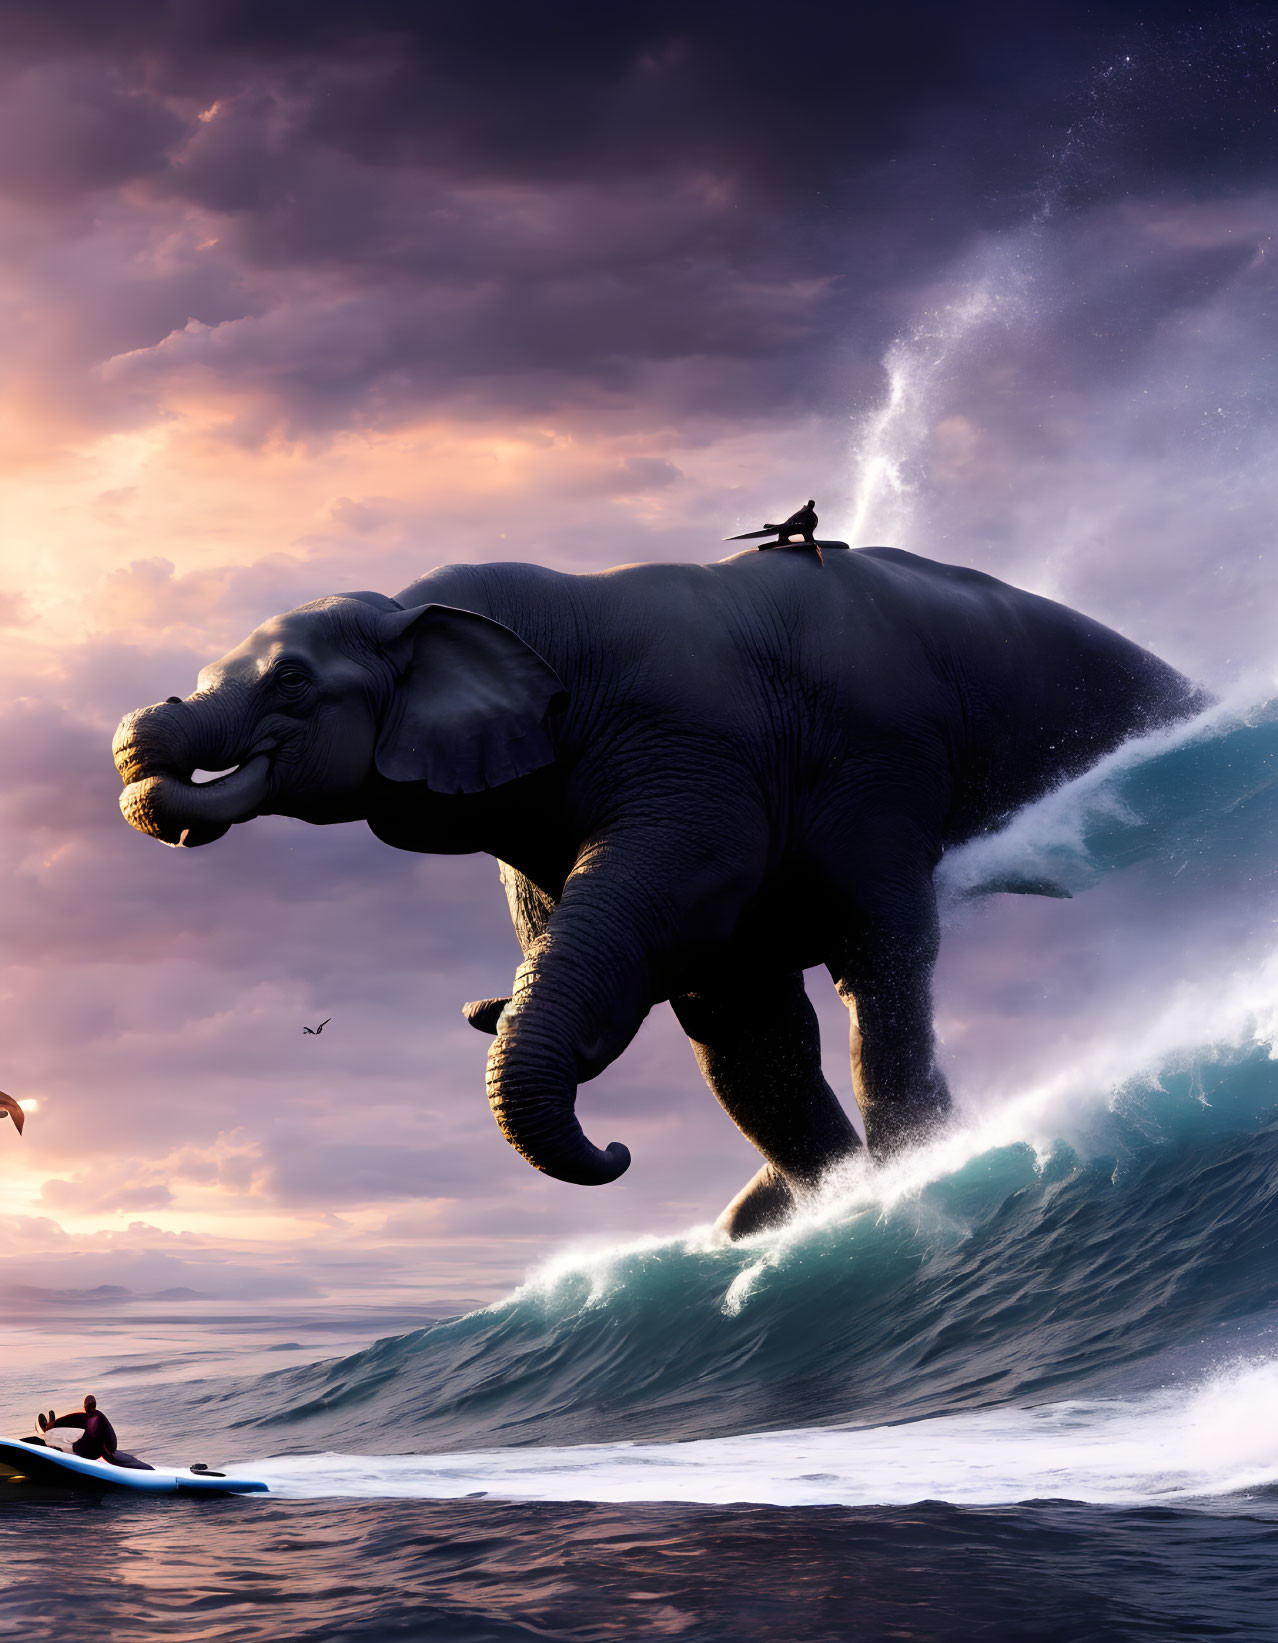 Surreal image: giant elephant surfing wave at sunset